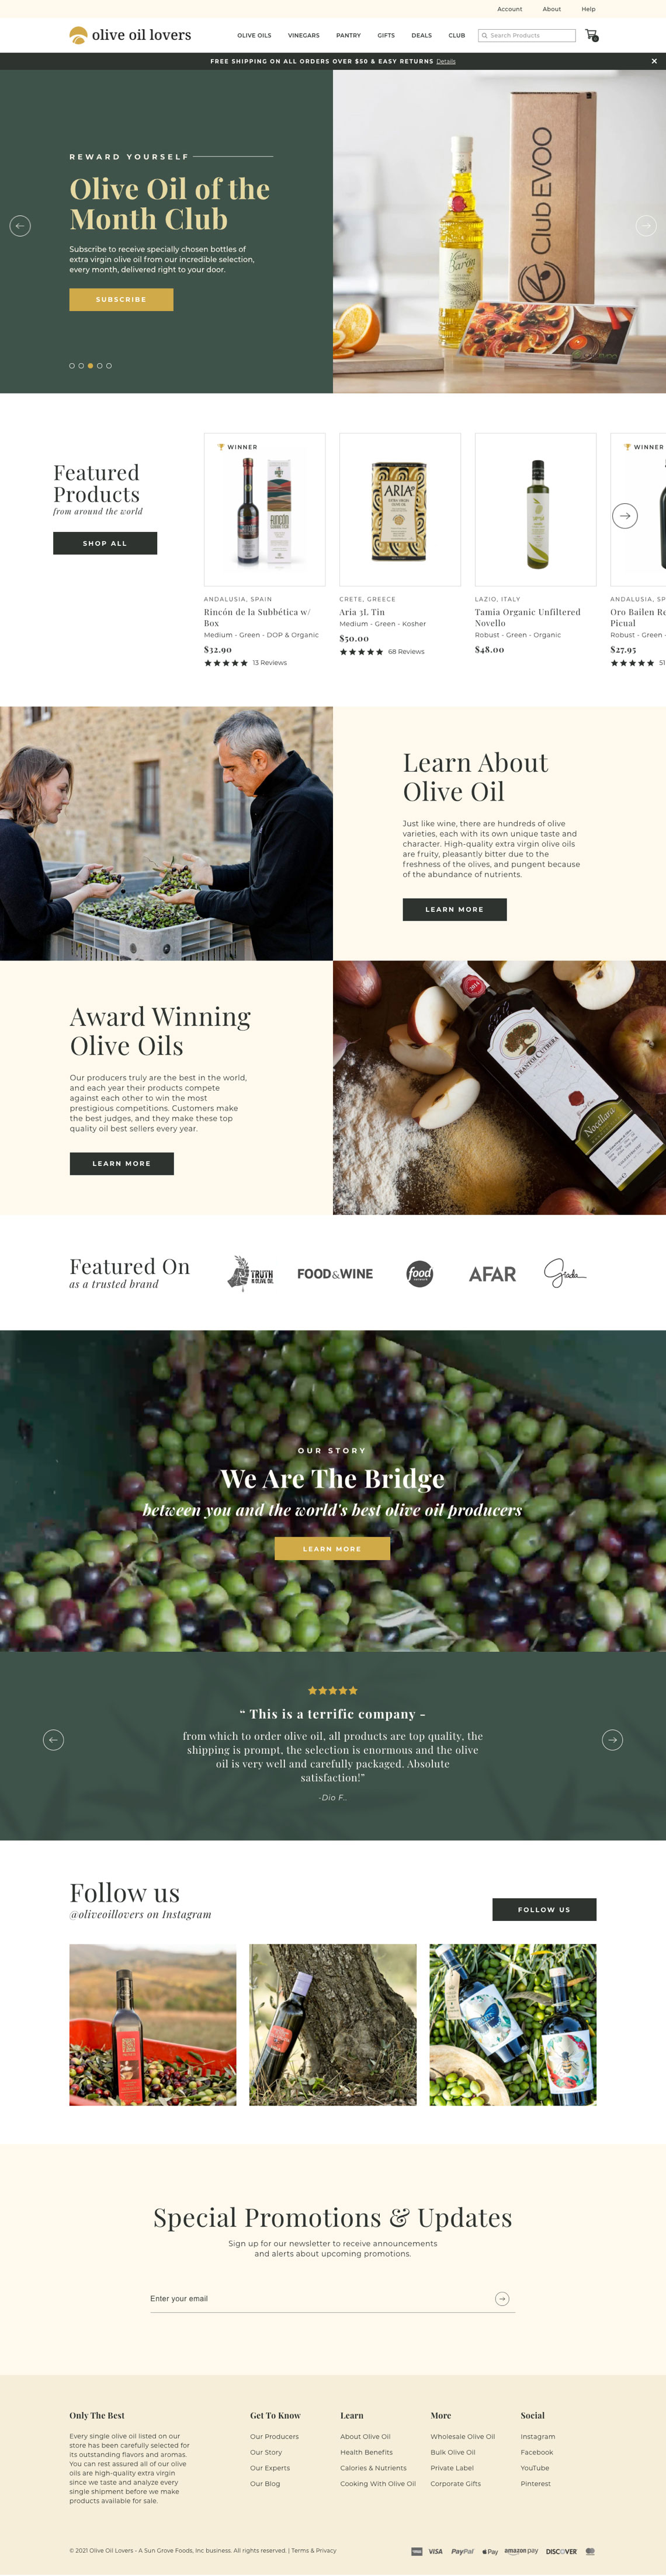 Olive Oil Lovers - Homepage